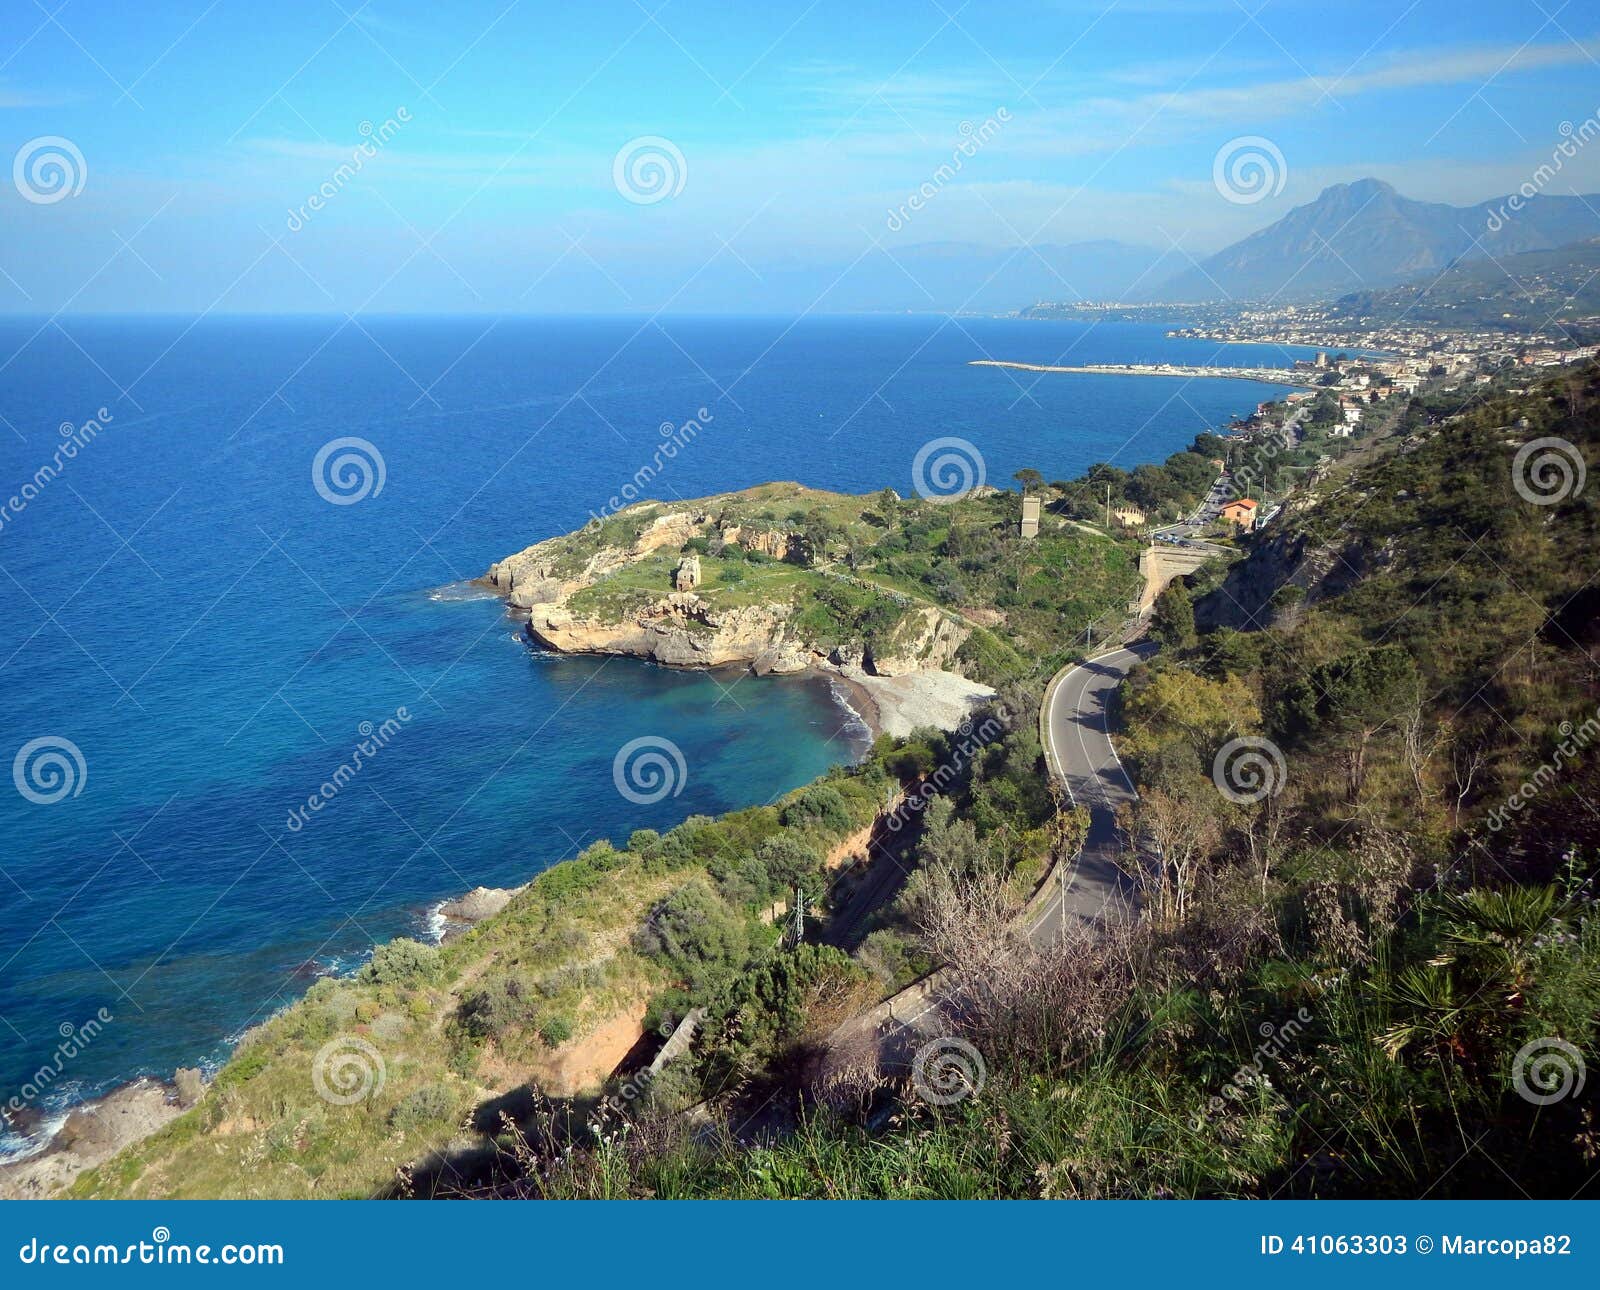 altavilla milicia - panorama of the coast